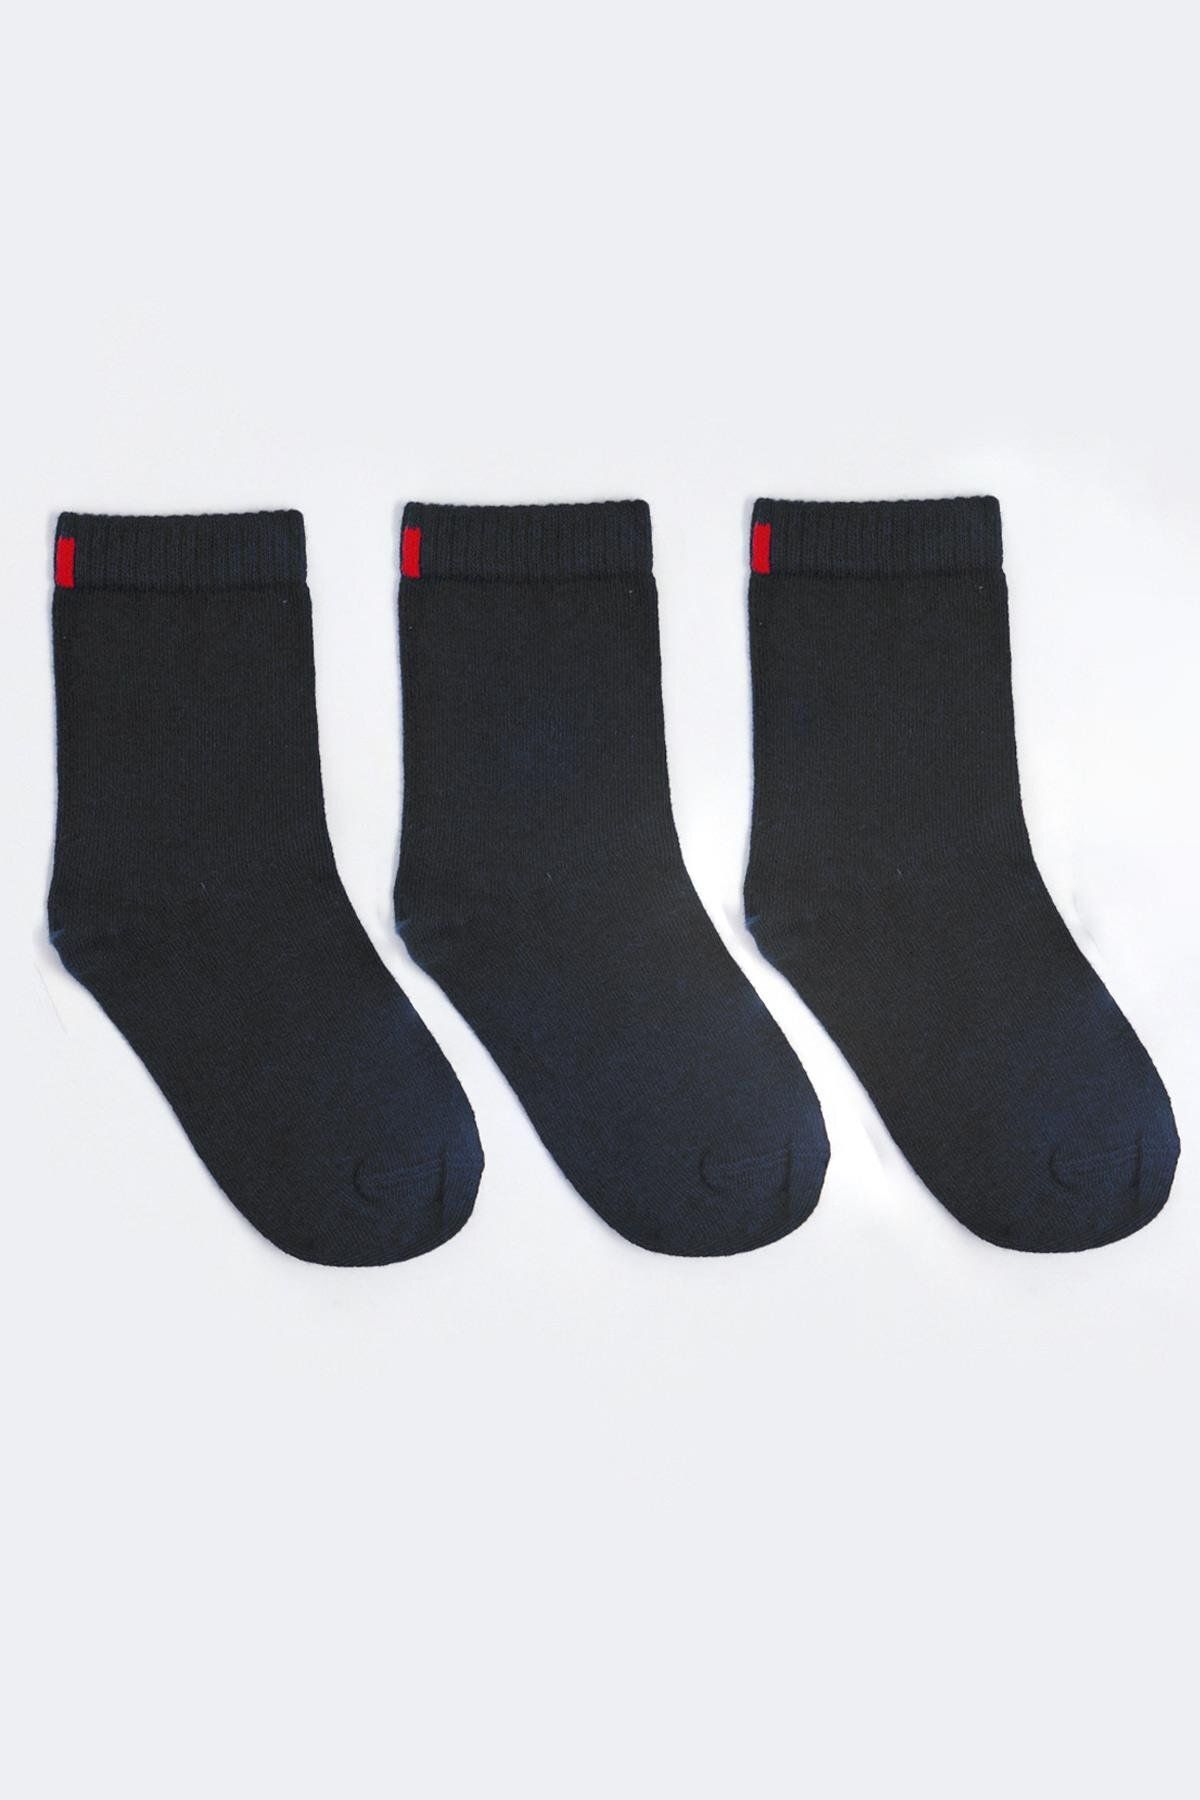 Katia & Bony 3'lü Paket Family Çocuk Soket Çorap Siyah/siyah/siyah